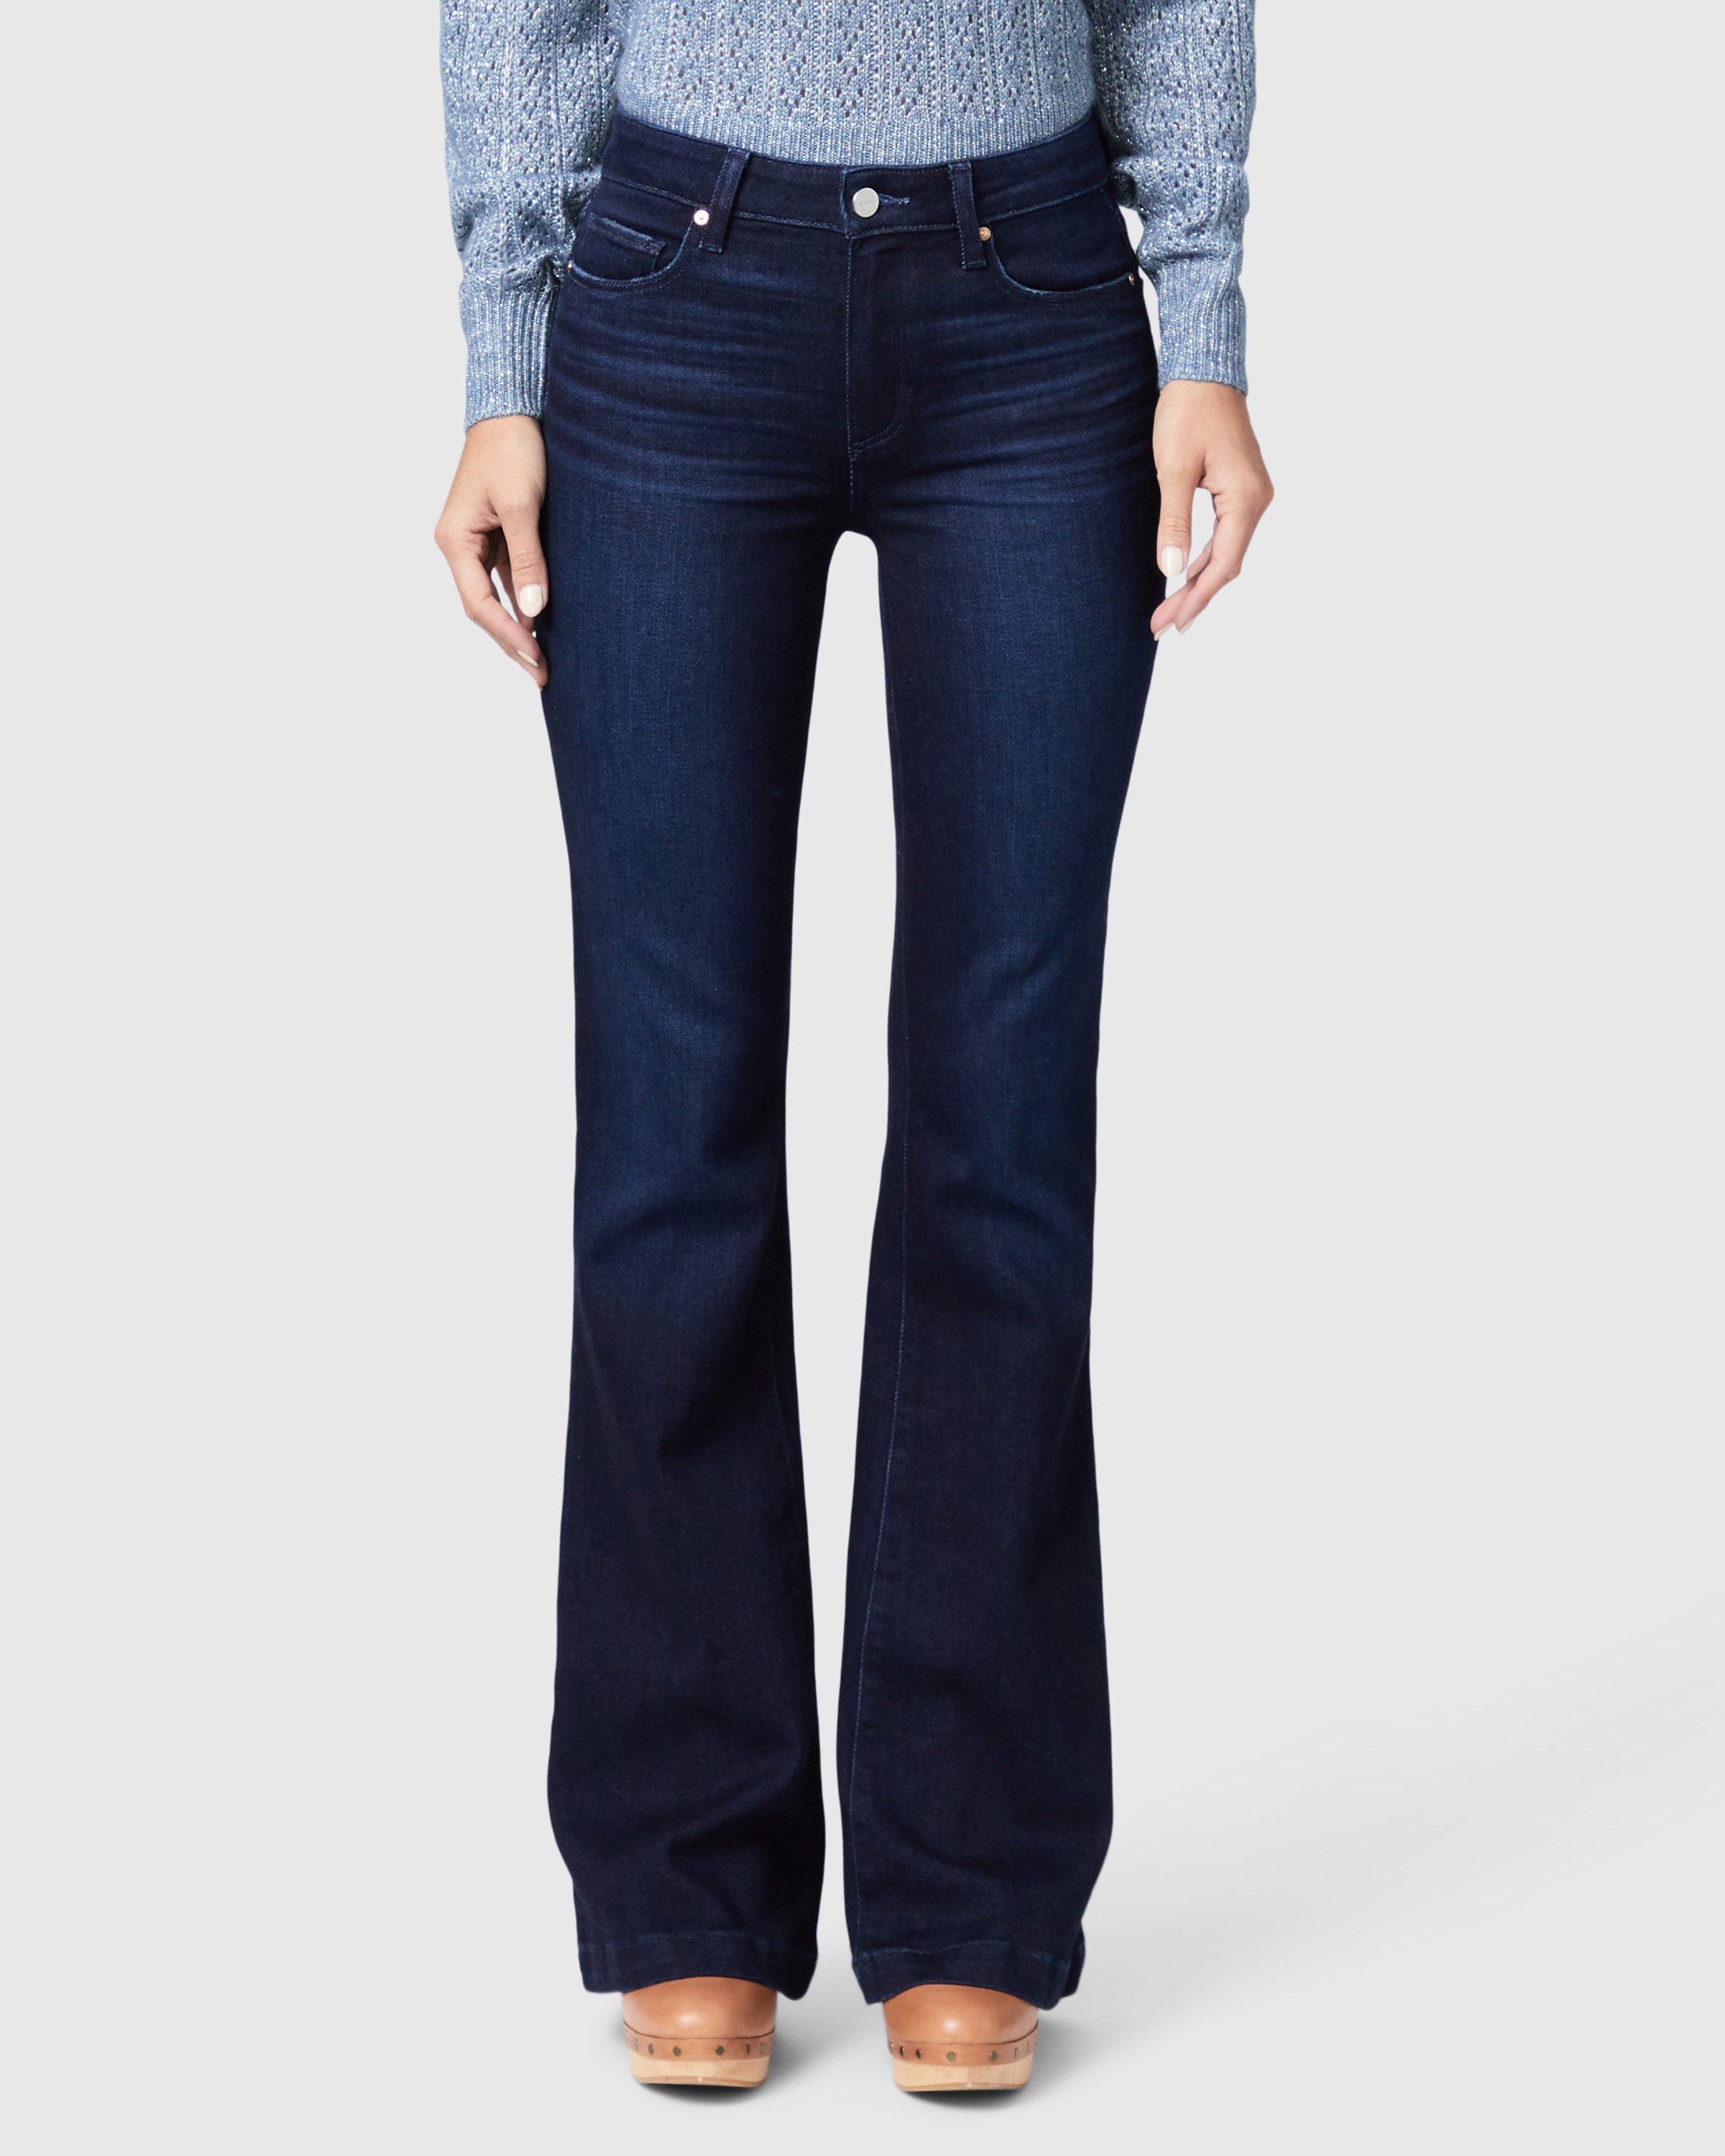 Damen Bekleidung Jeans Schlagjeans PAIGE Synthetik DENIM HIGH in Blau 